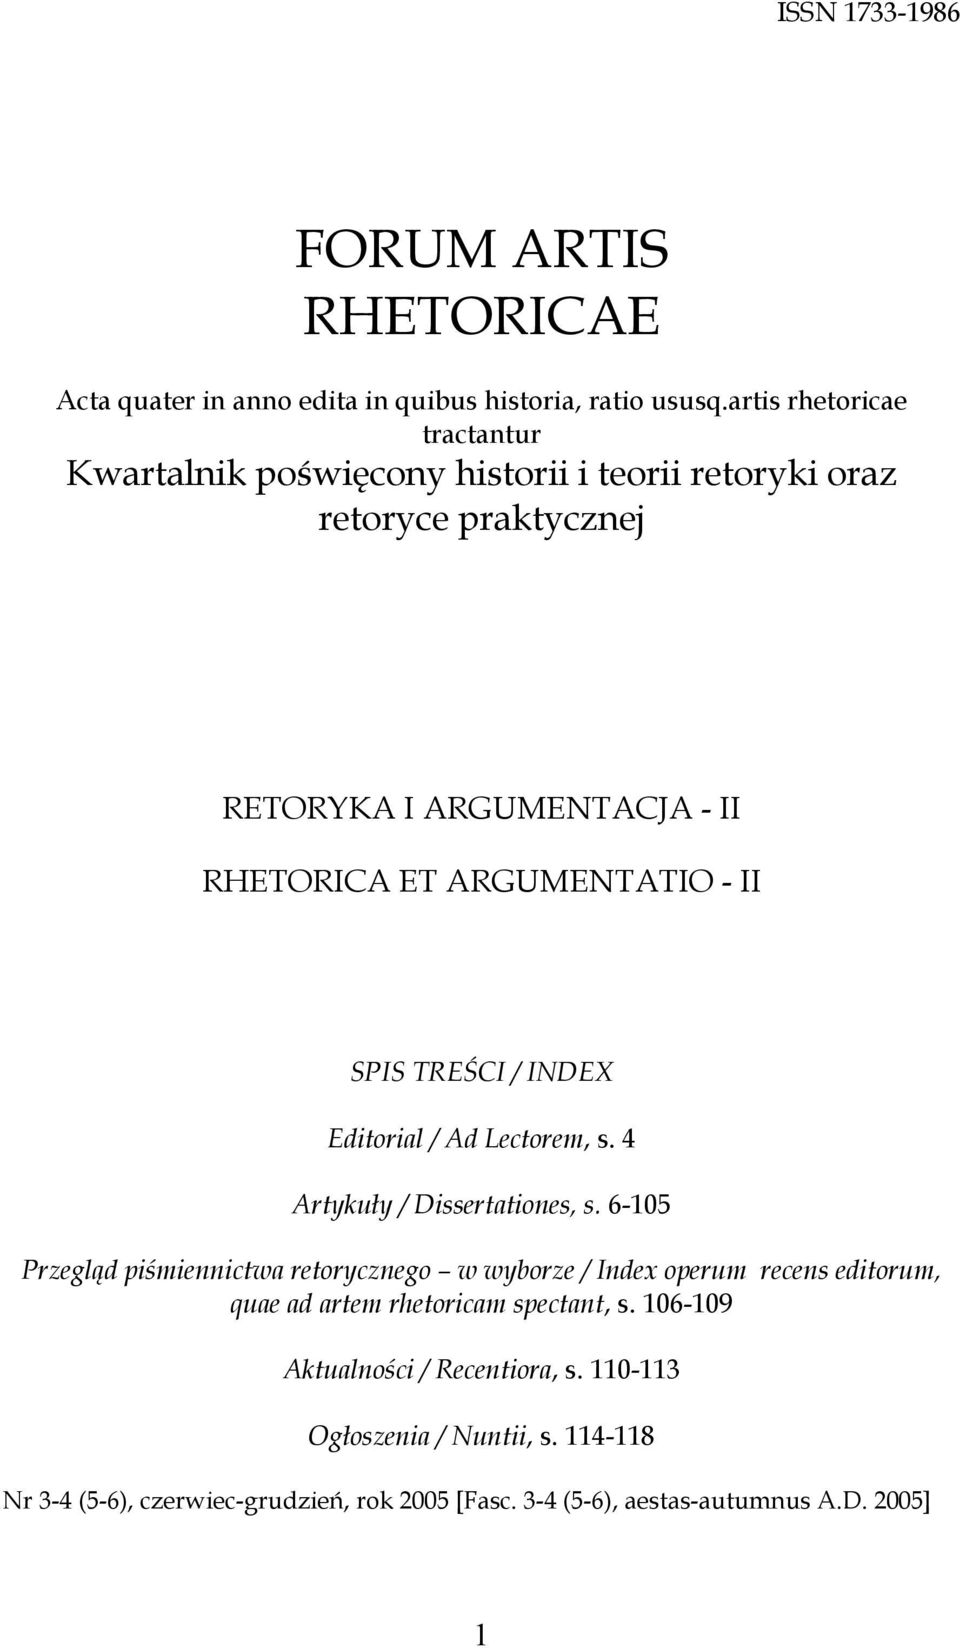 ARGUMENTATIO - II SPIS TREŚCI / INDEX Editorial / Ad Lectorem, s. 4 Artykuły / Dissertationes, s.